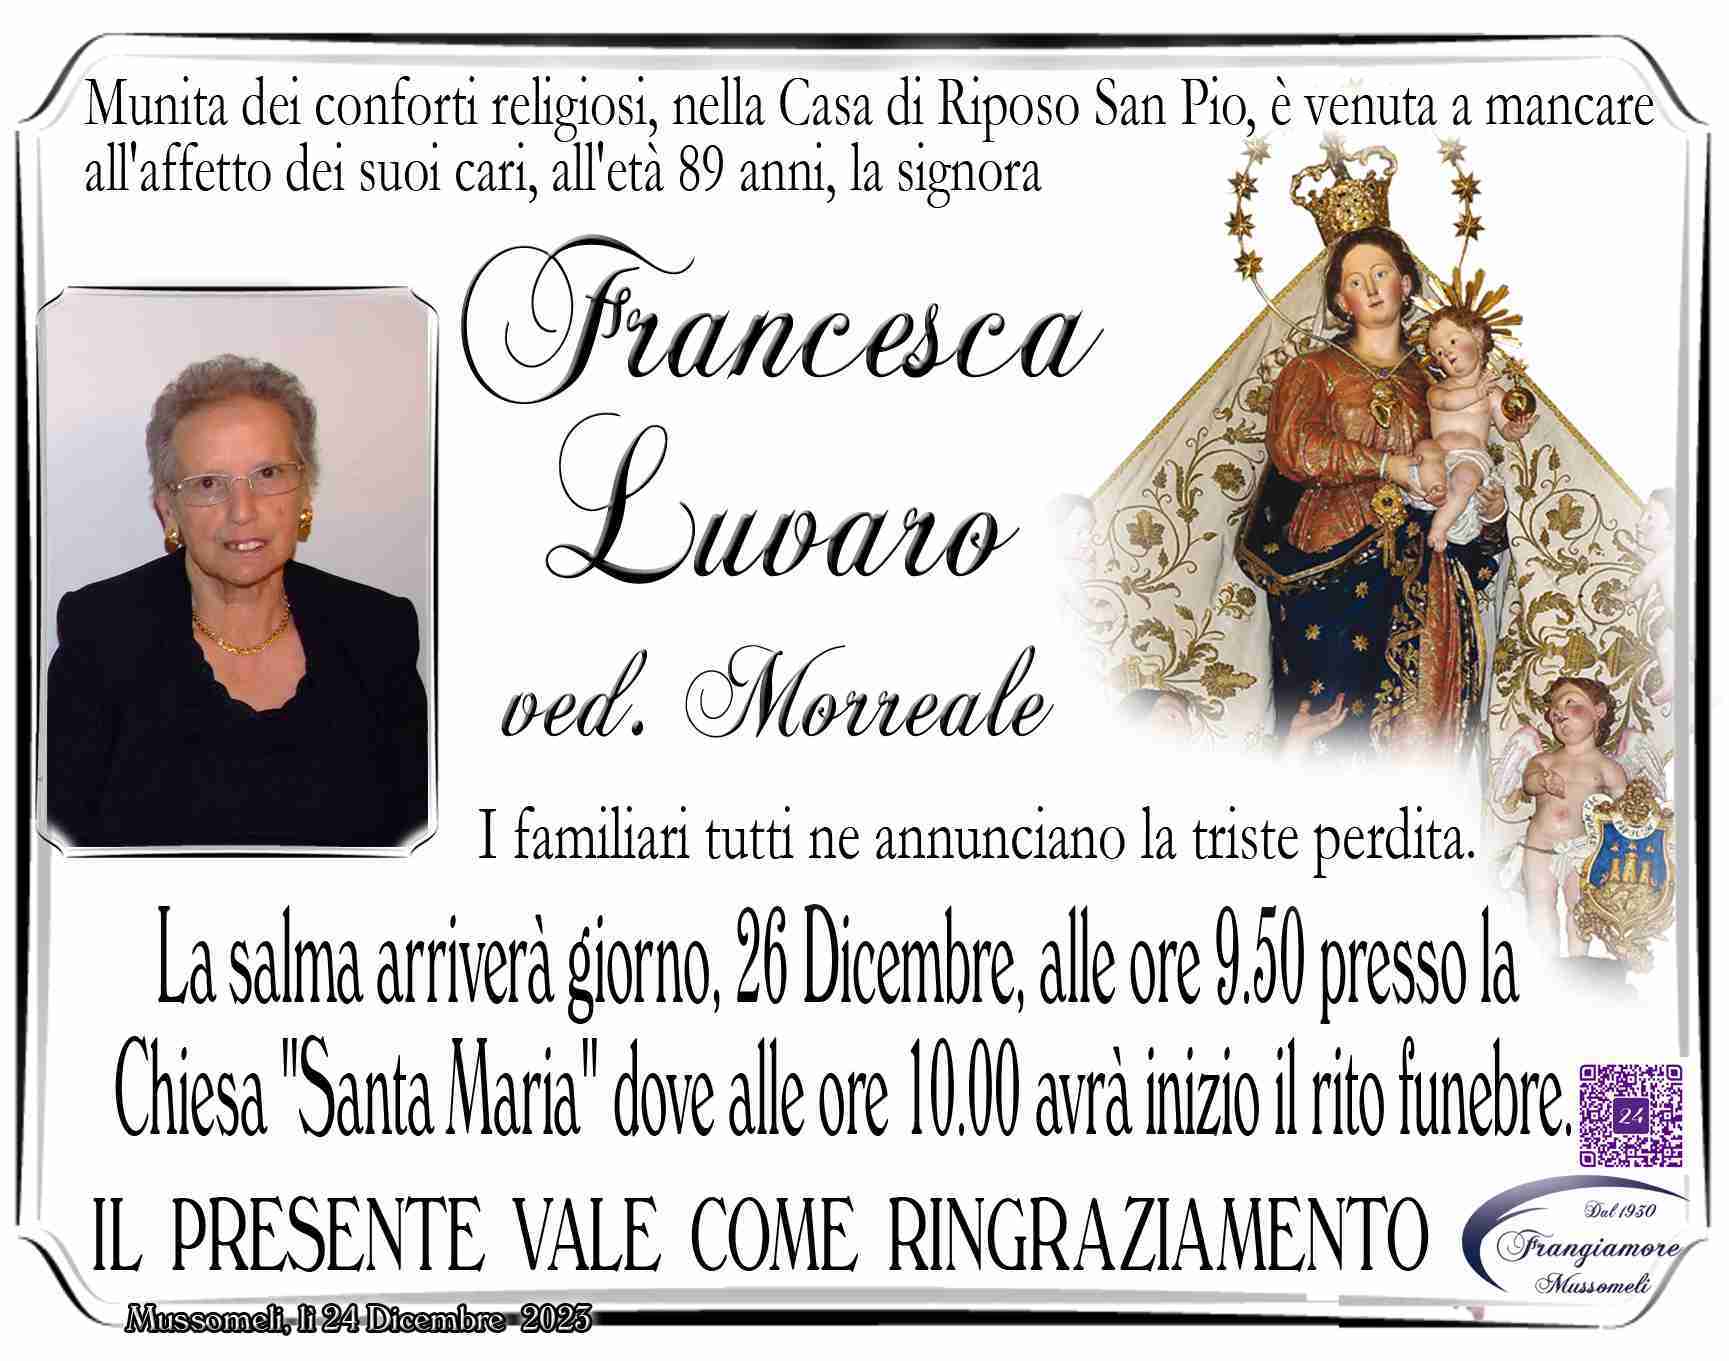 Francesca Luvaro